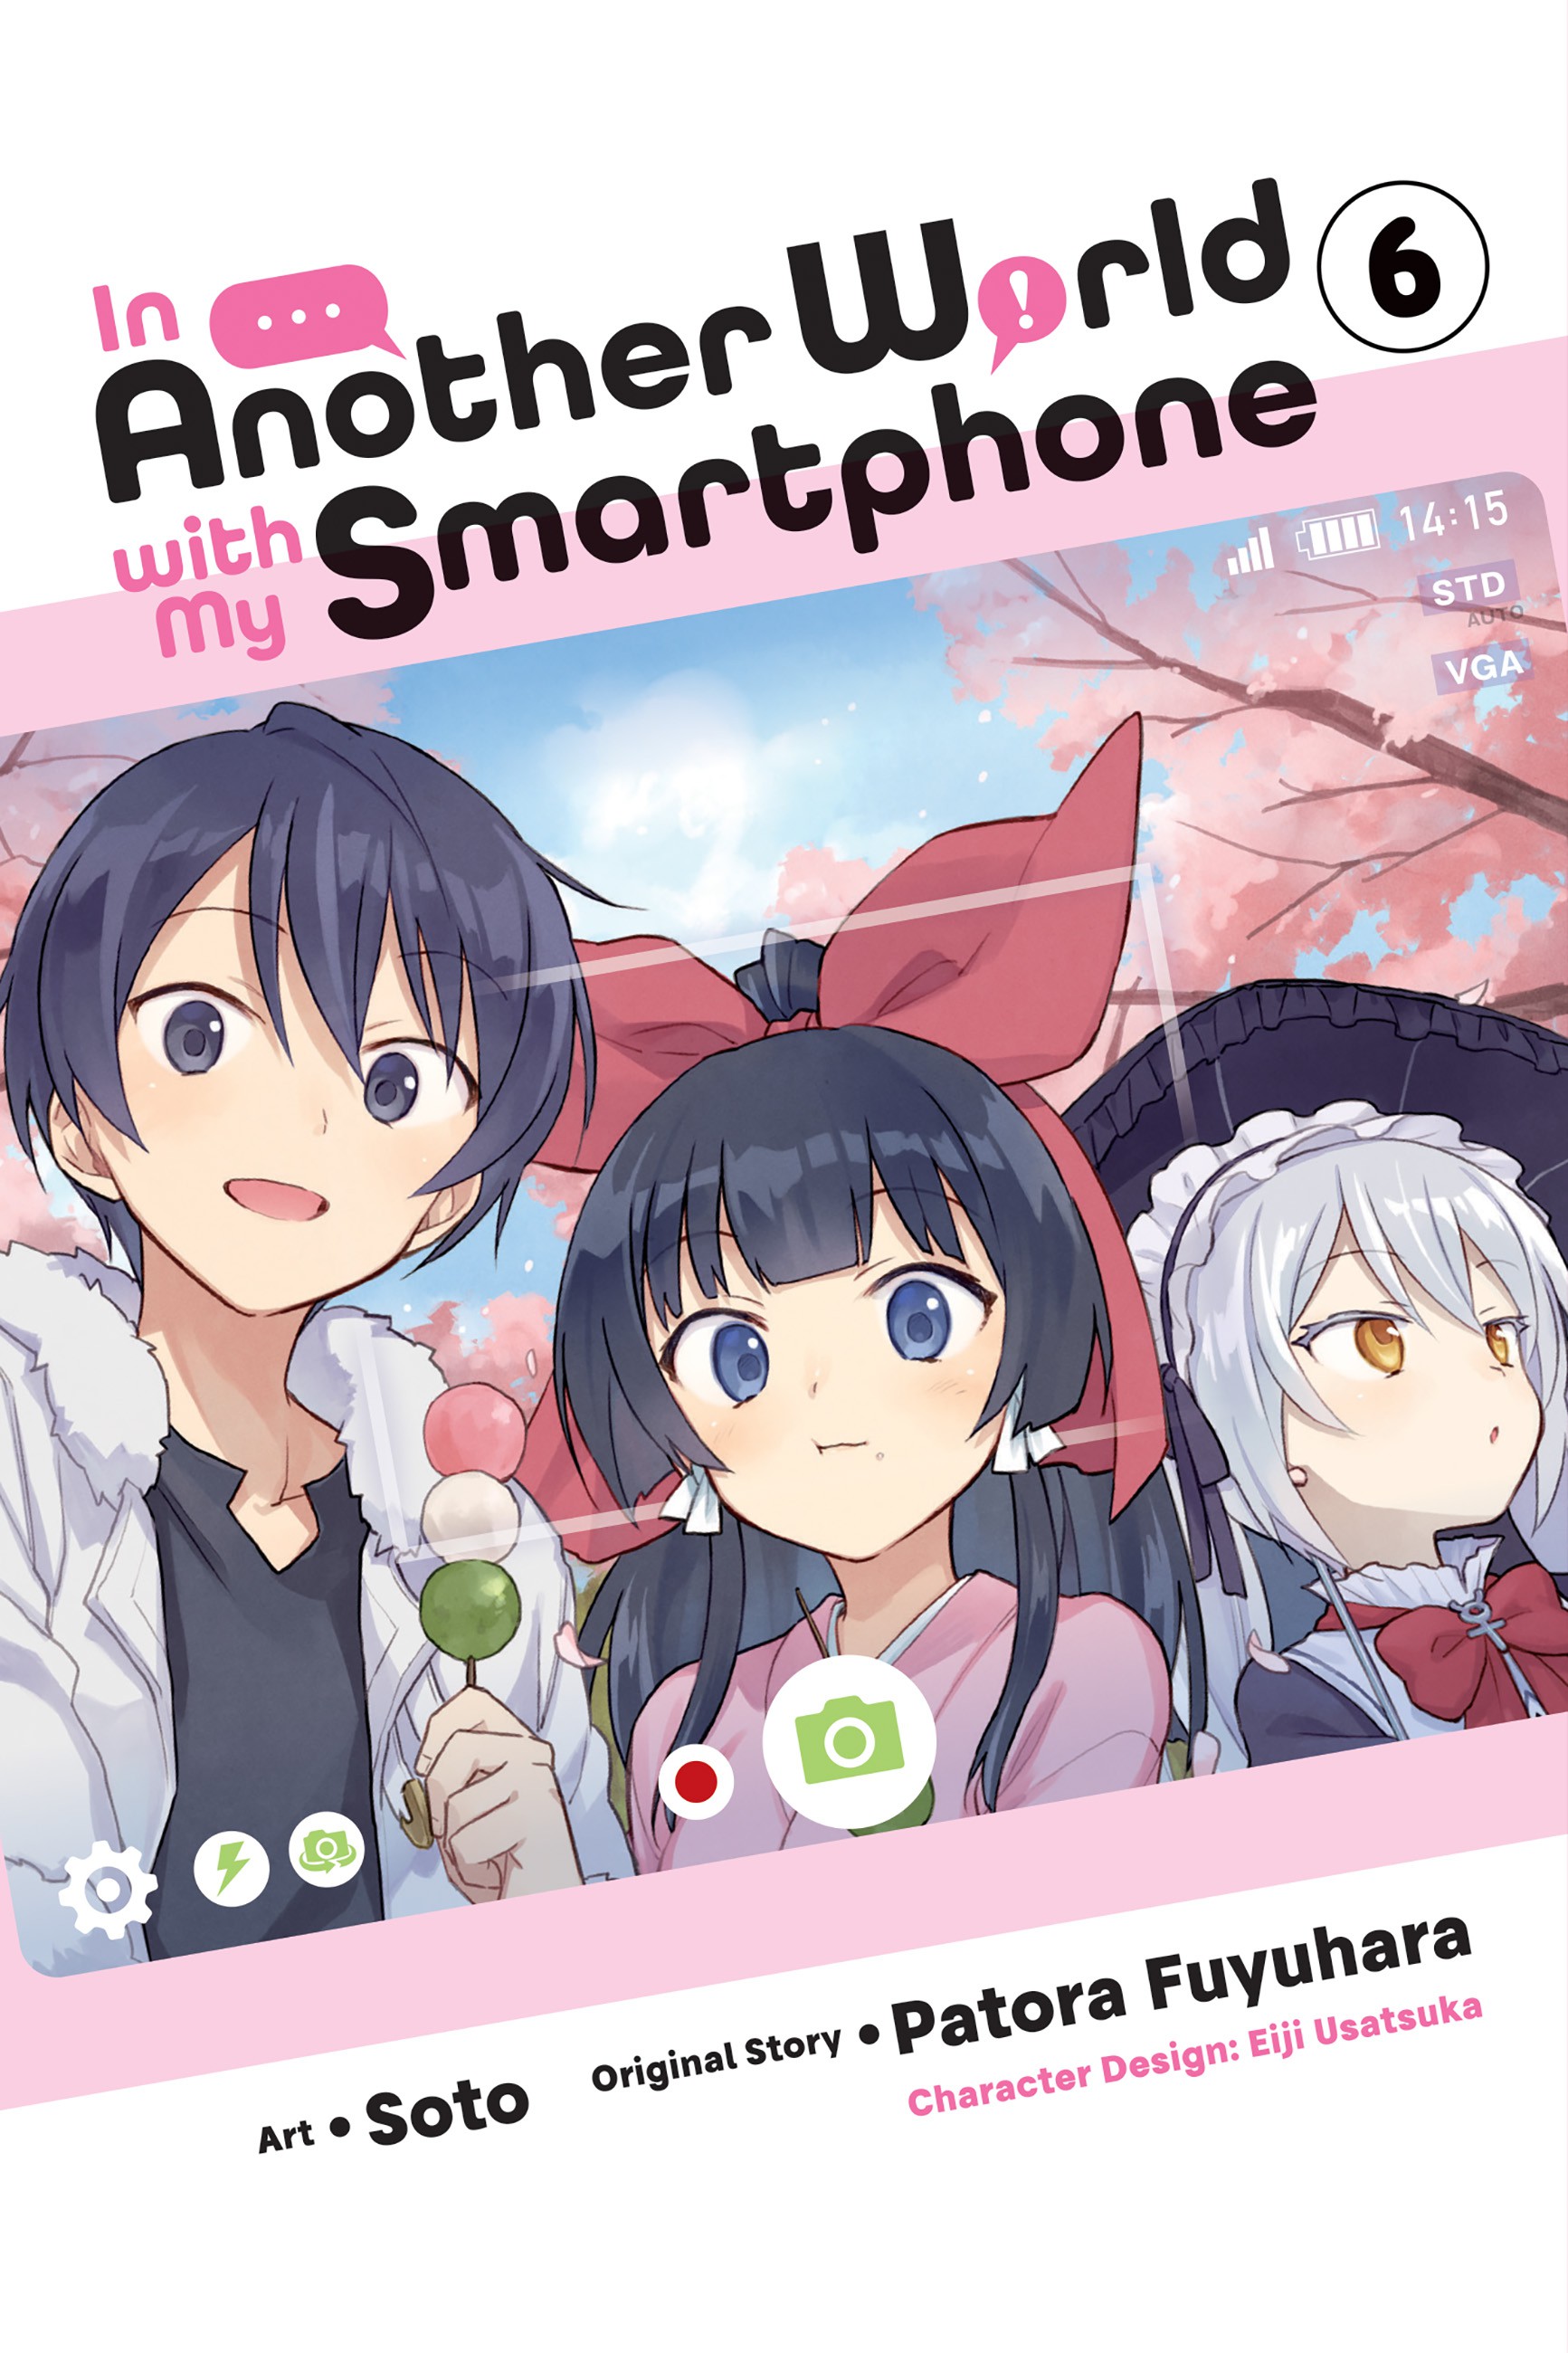 CDJapan : Isekai wa Smartphone to tomo ni. (In Another World With My  Smartphone) 5 (HJ NOVELS HJN07-04) [Light Novel] Patora Fuyuhara, Eiji  Usatsuka BOOK